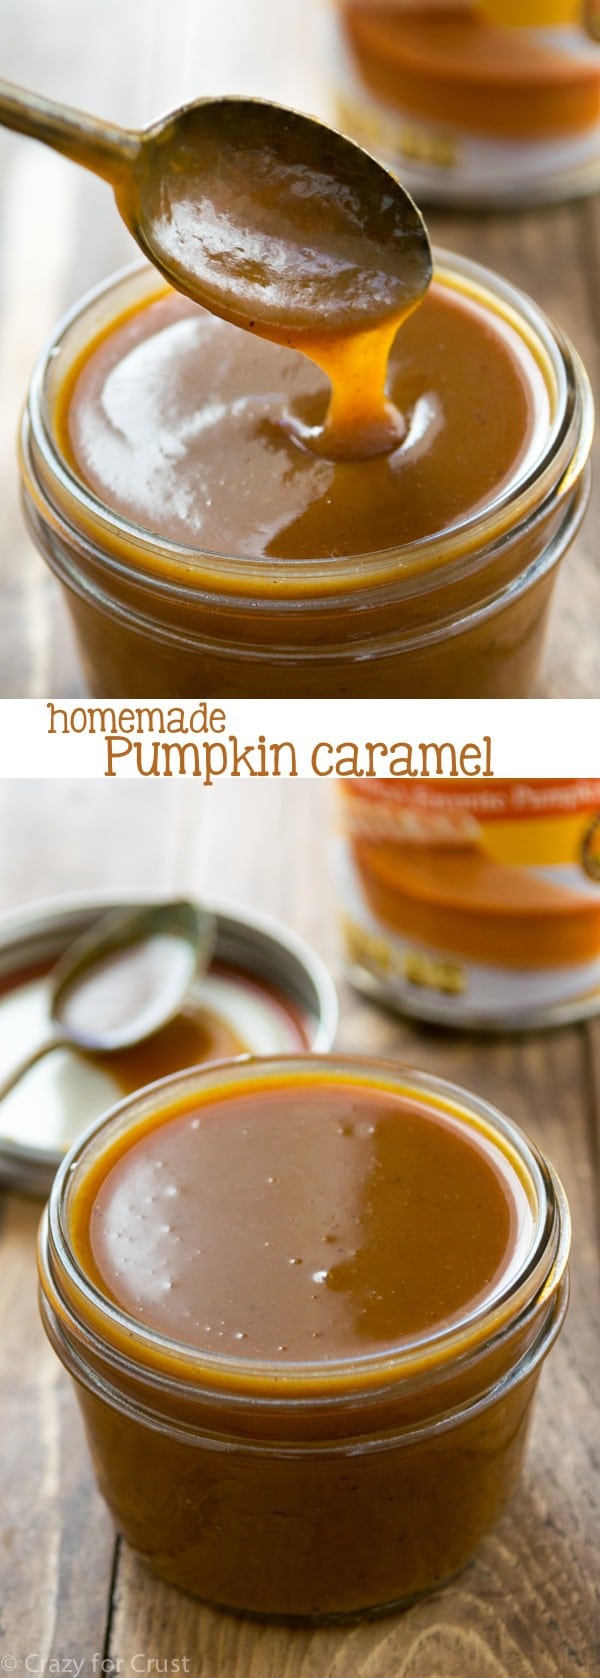 Easy Homemade Pumpkin Caramel Sauce Recipe - caramel infused with pumpkin puree for fall! 